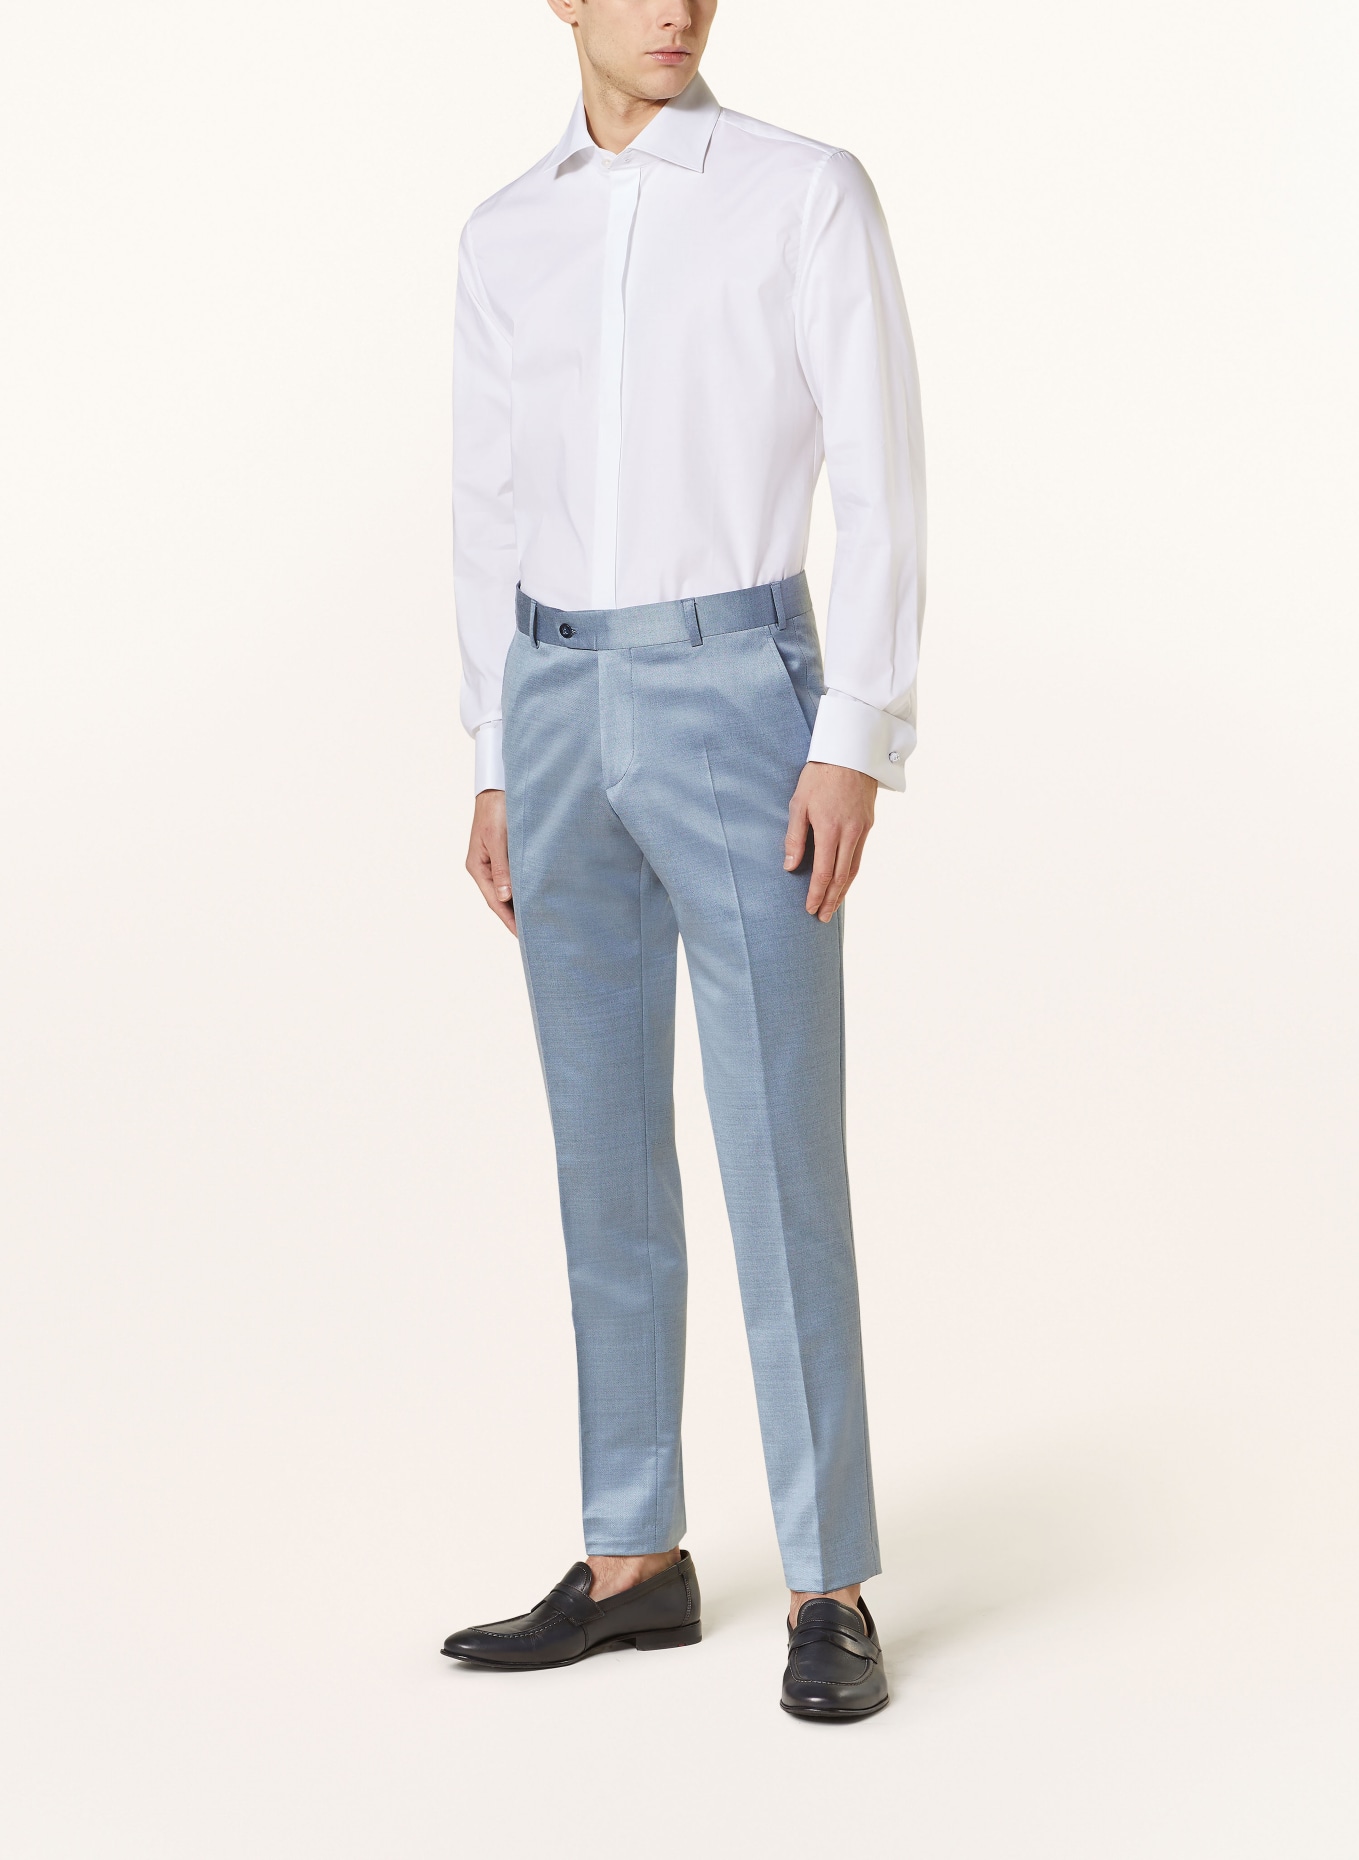 WILVORST Anzughose Slim Fit, Farbe: 036 hell Blau (Bild 3)